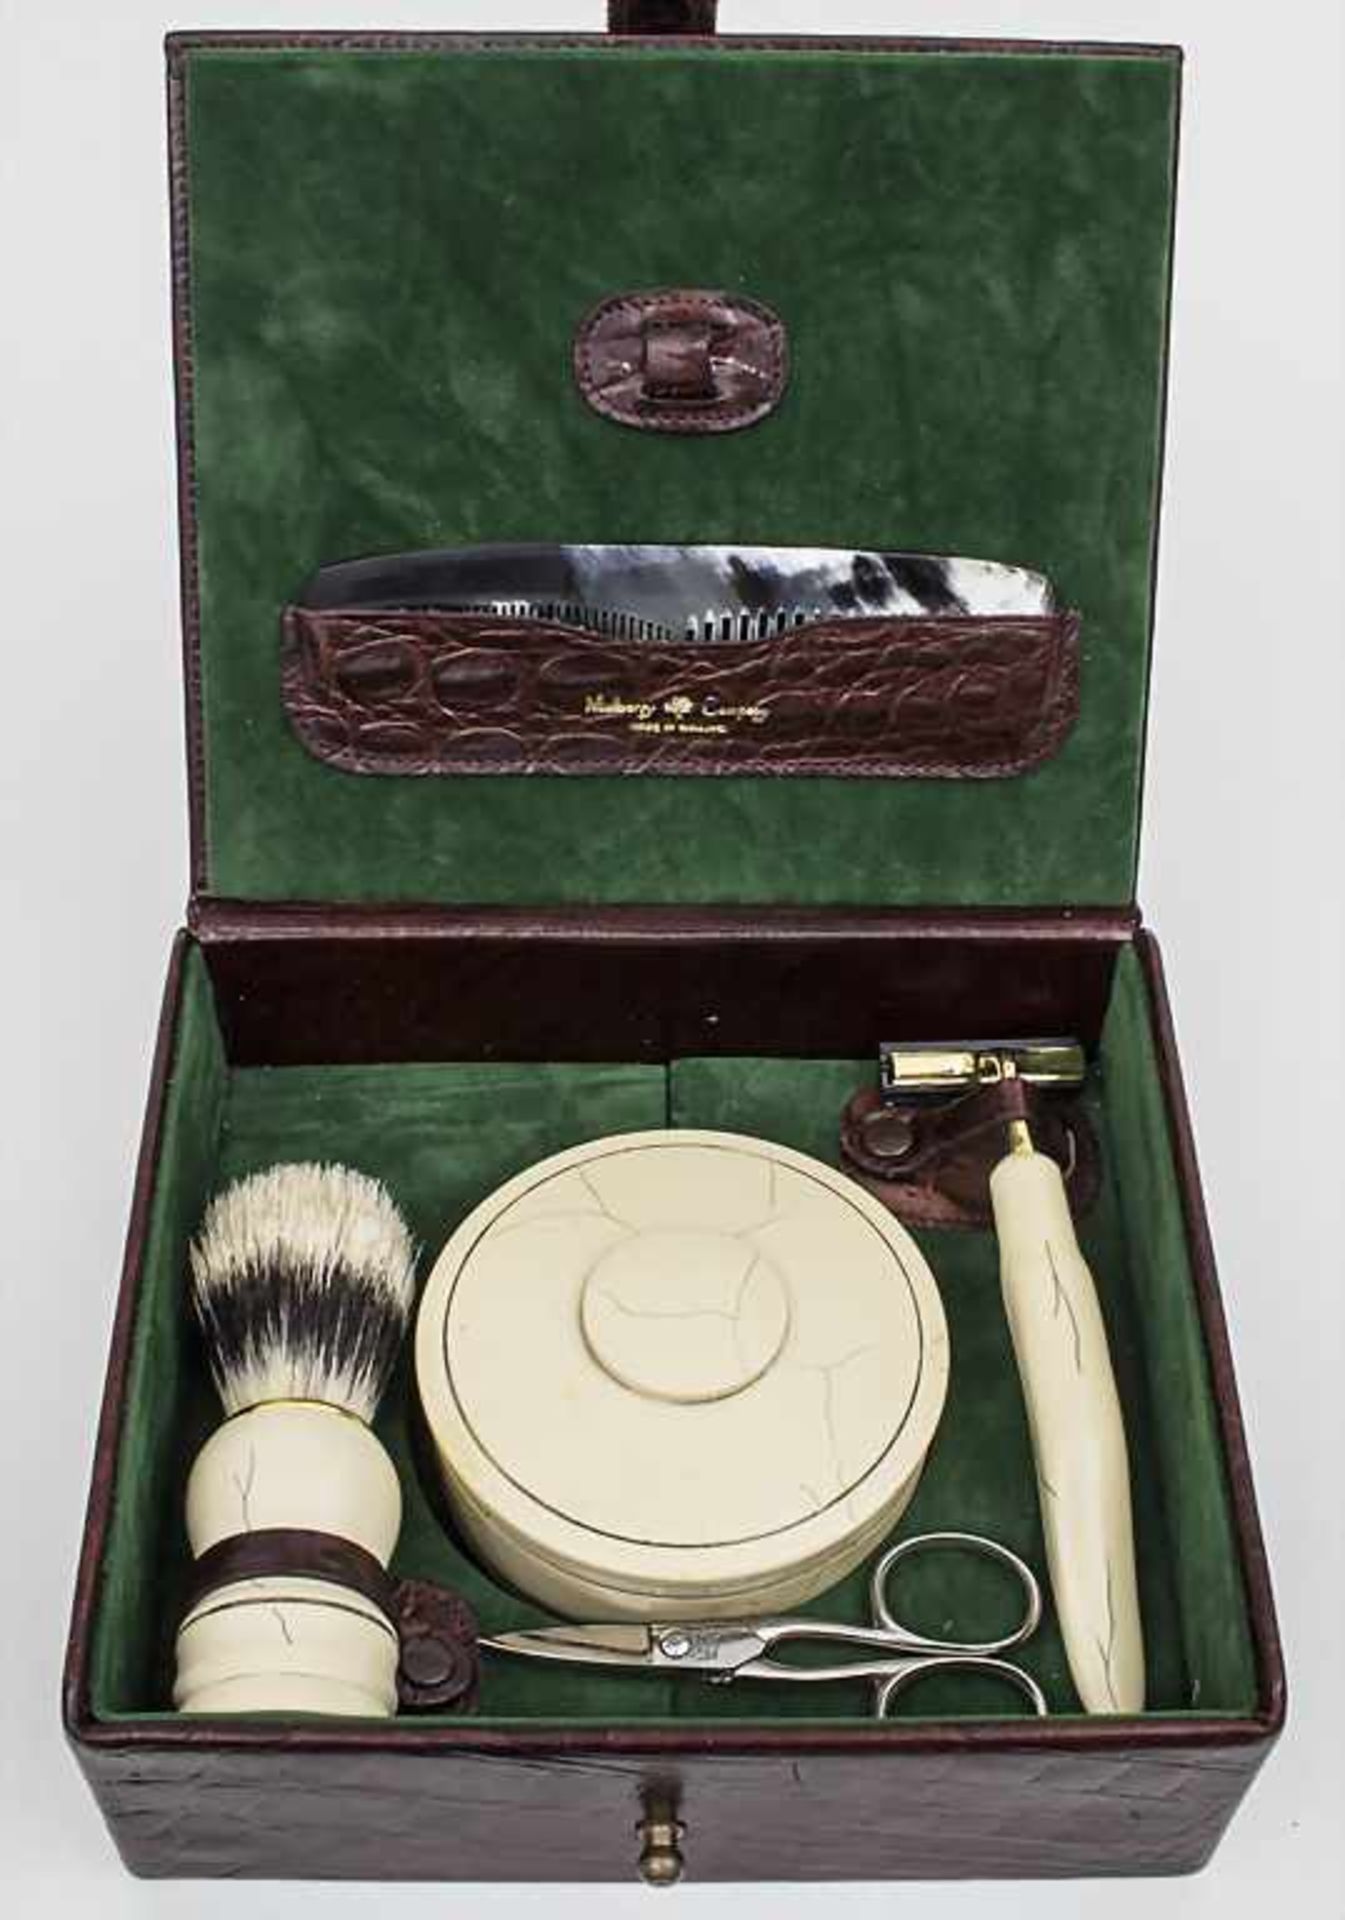 Rasierset in Lederschatulle / A shaving case, England, Mulberry-Company Material: Lederschatulle mit